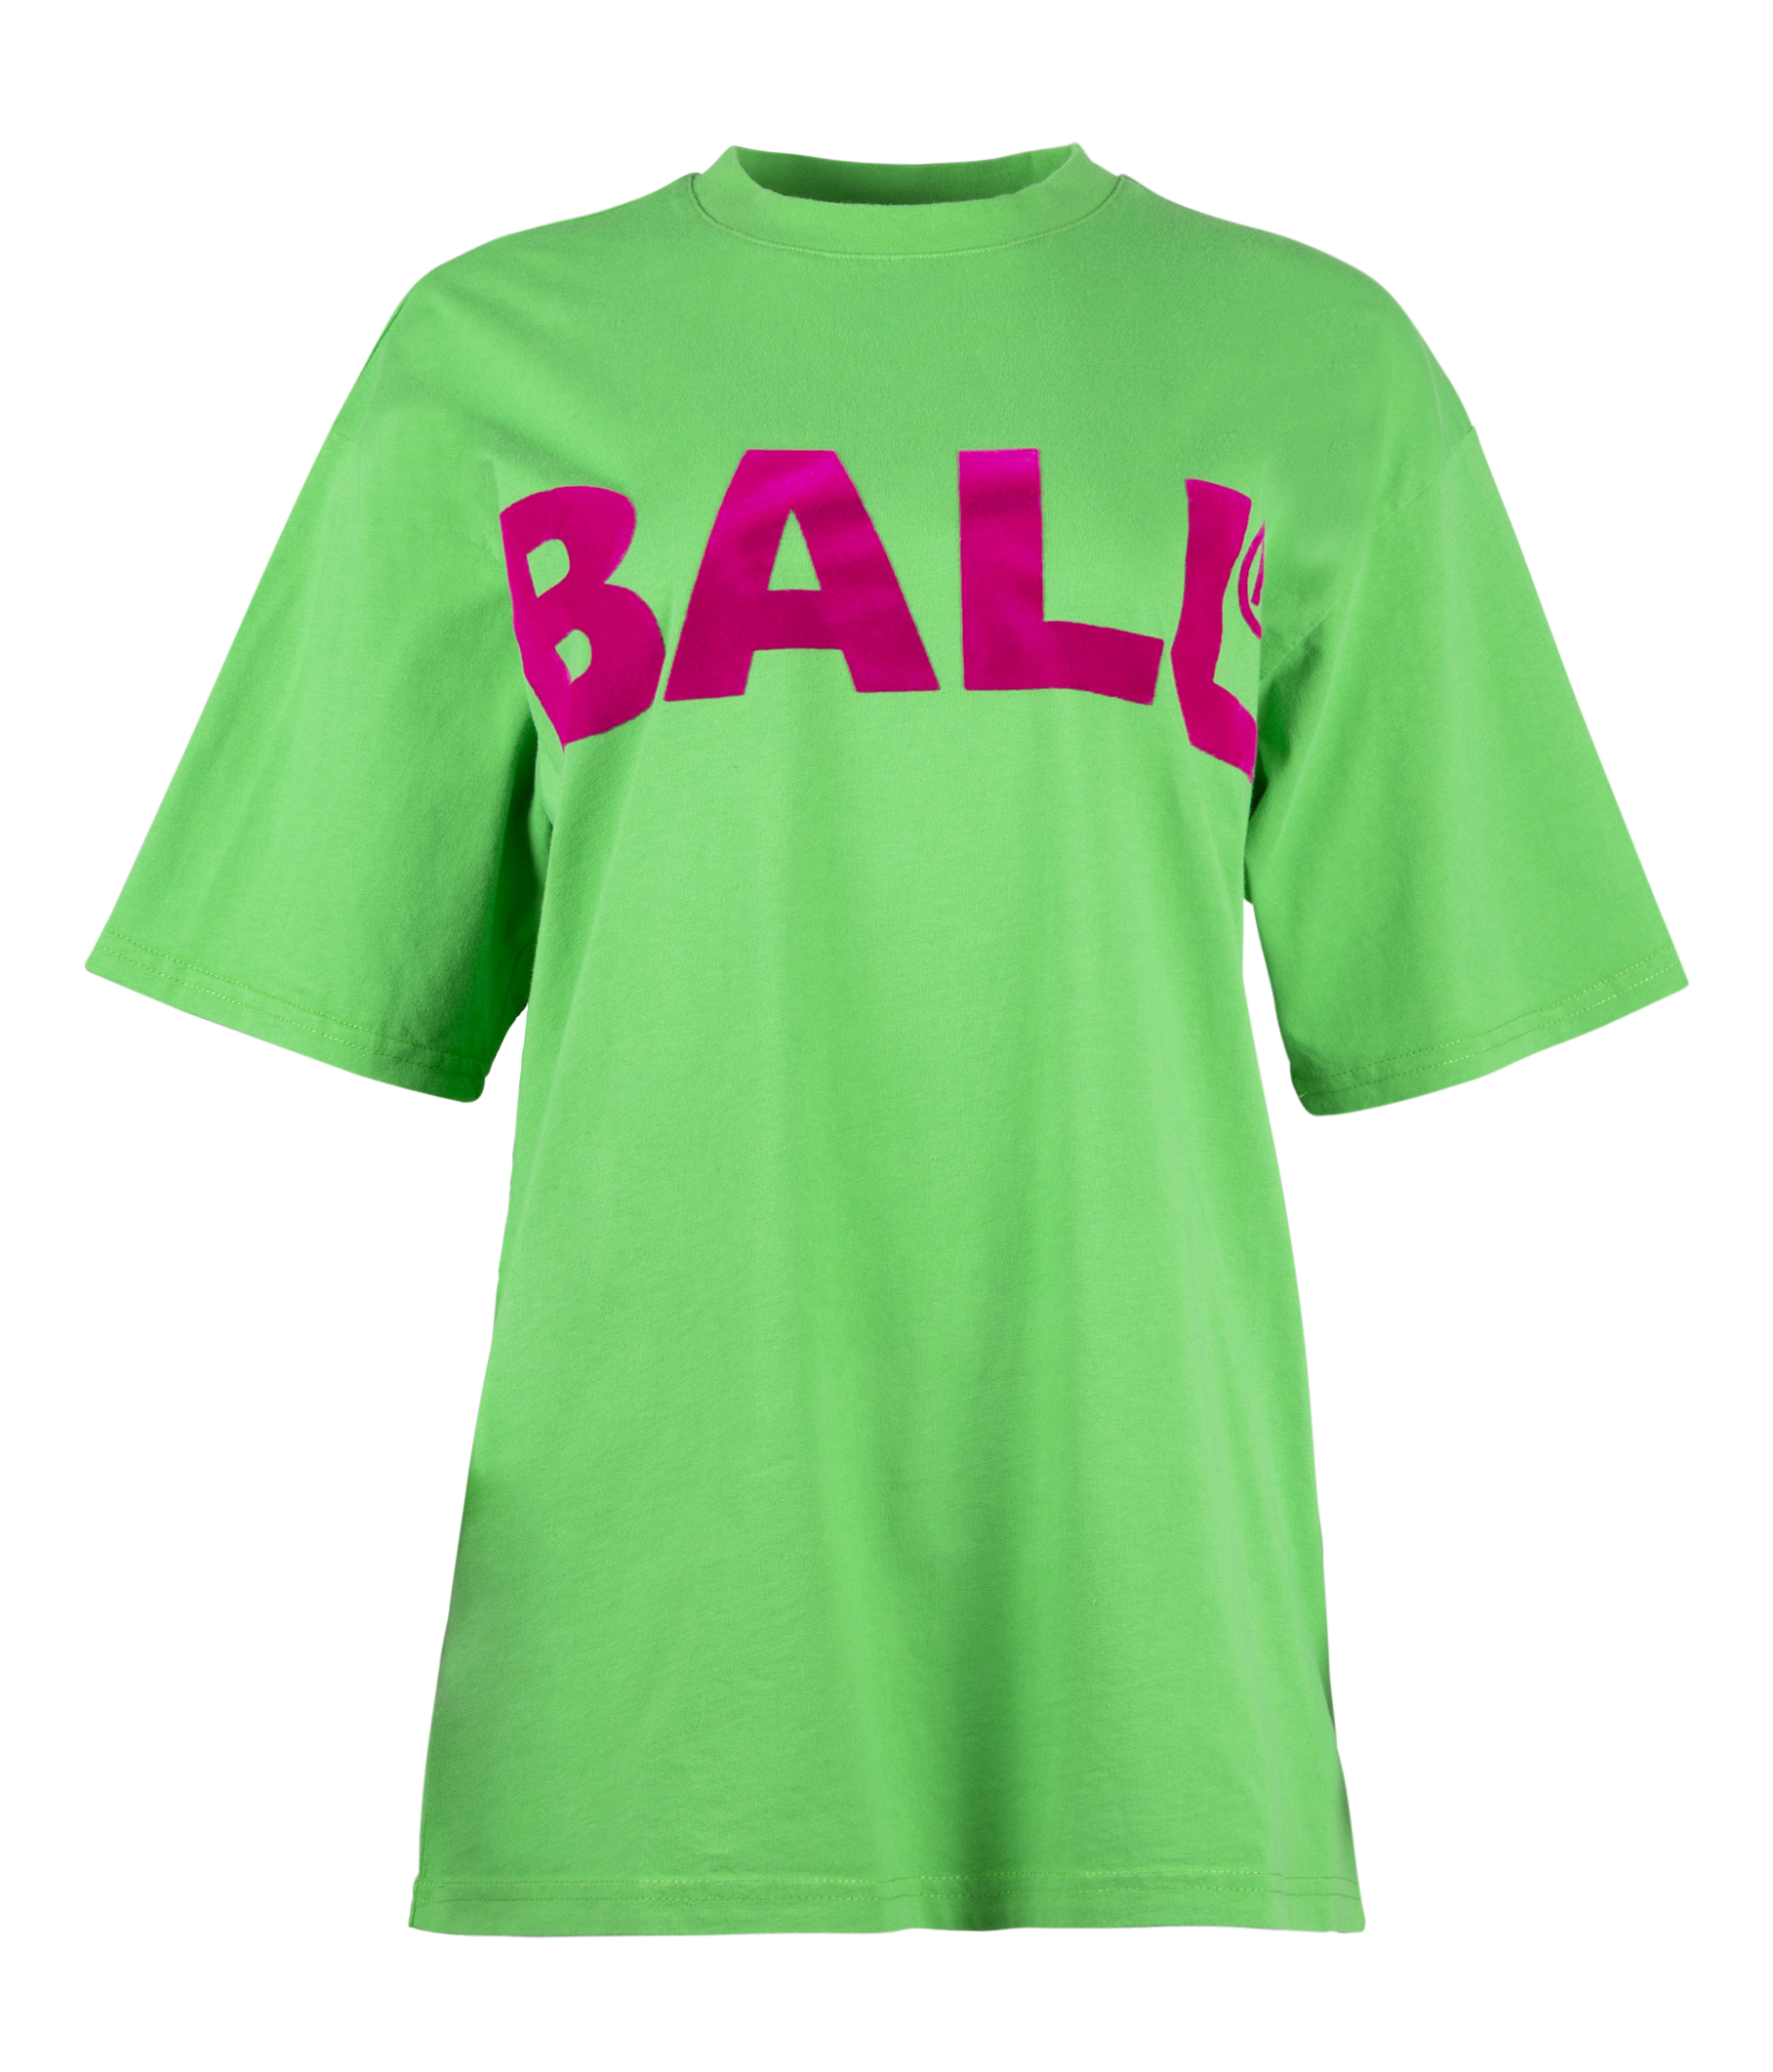 Ball CPH Flock Tee - Bright Green